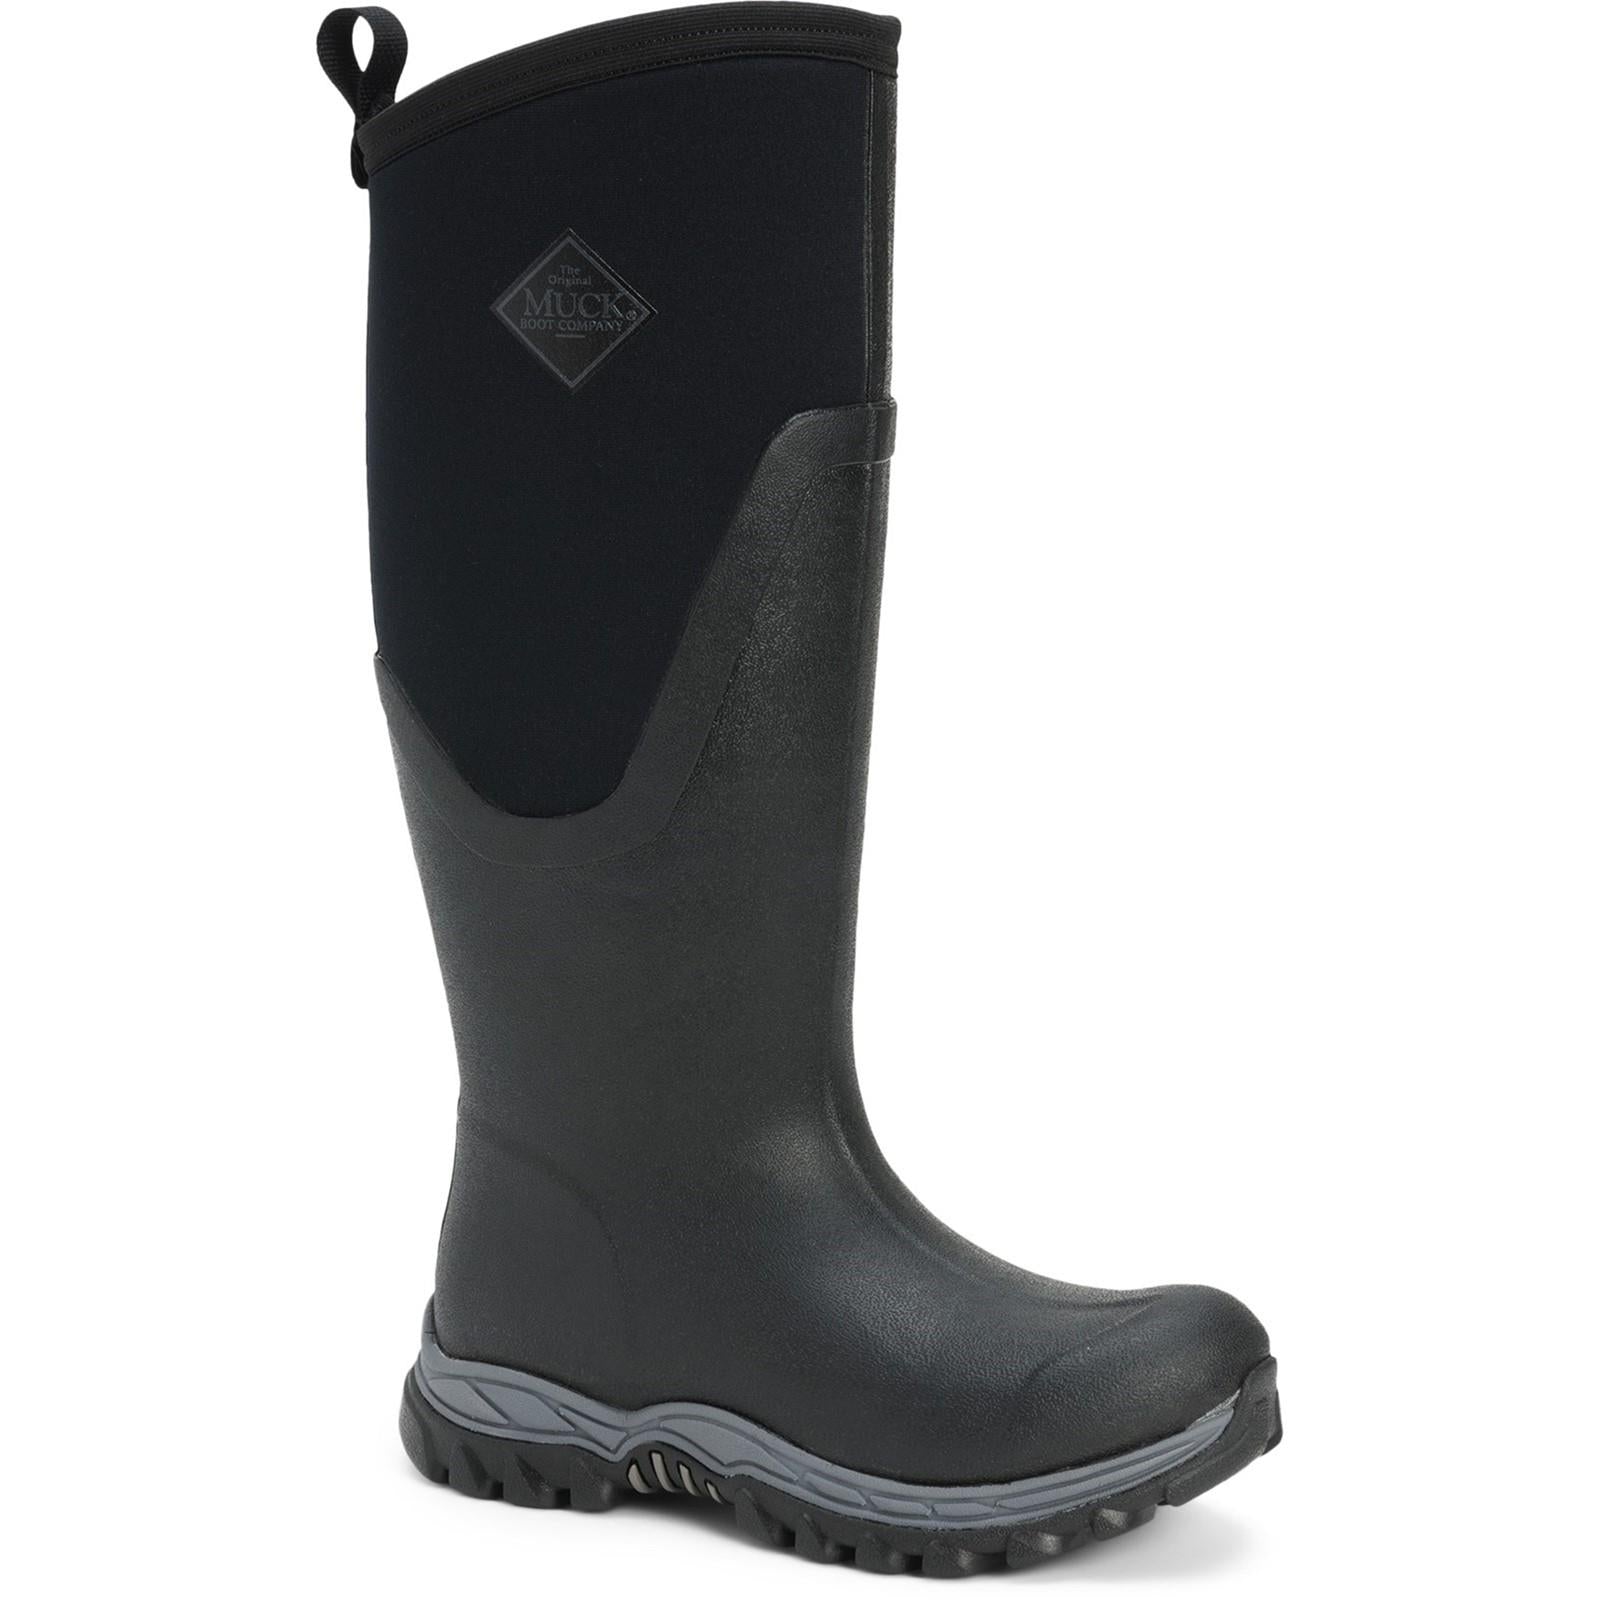 Muck Boots Arctic Sport II Tall ladies black warm fleece lined wellington boots